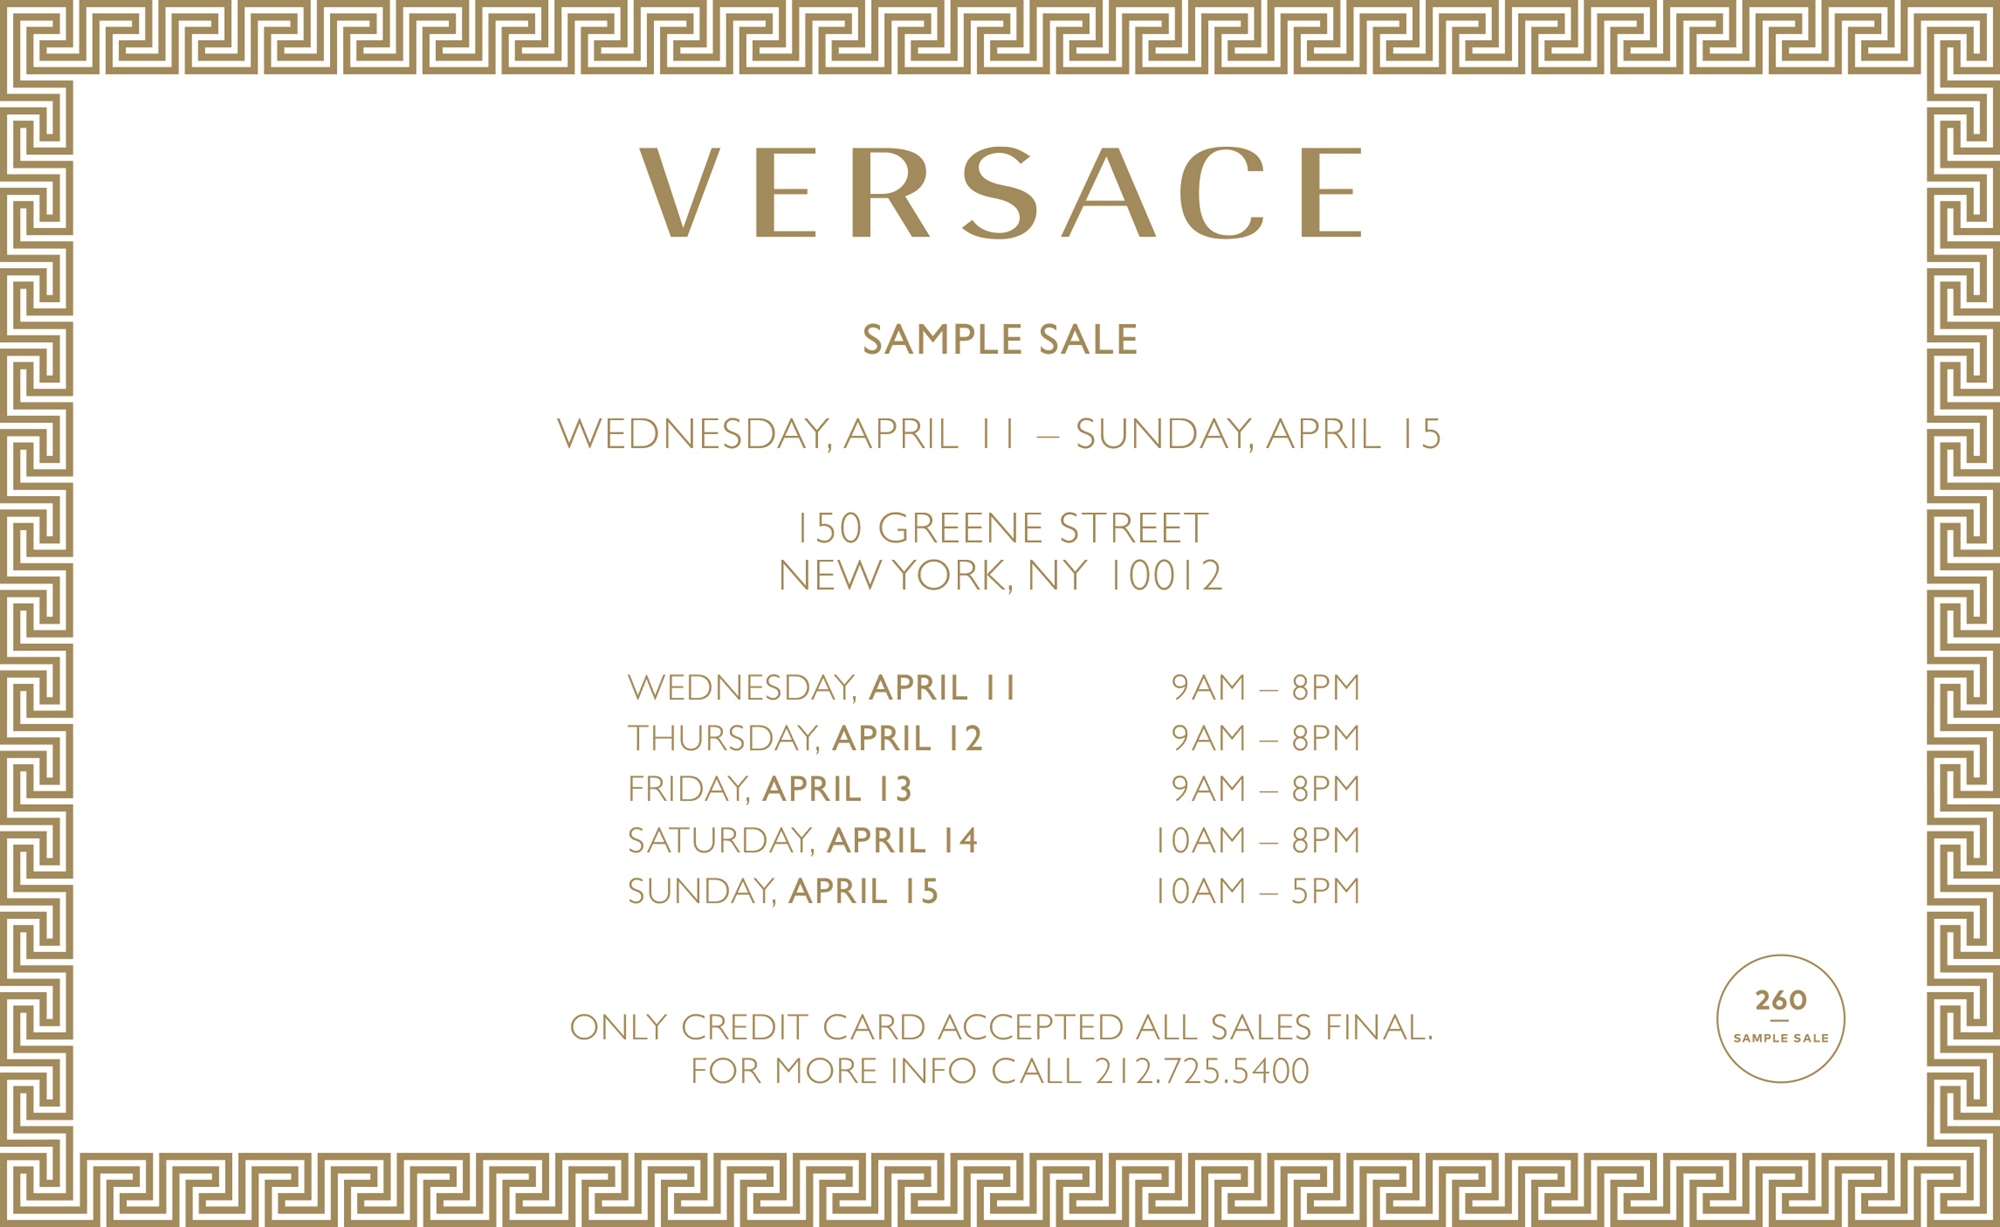 SHOPPING NYC Versace Versace Versace Sample Sale